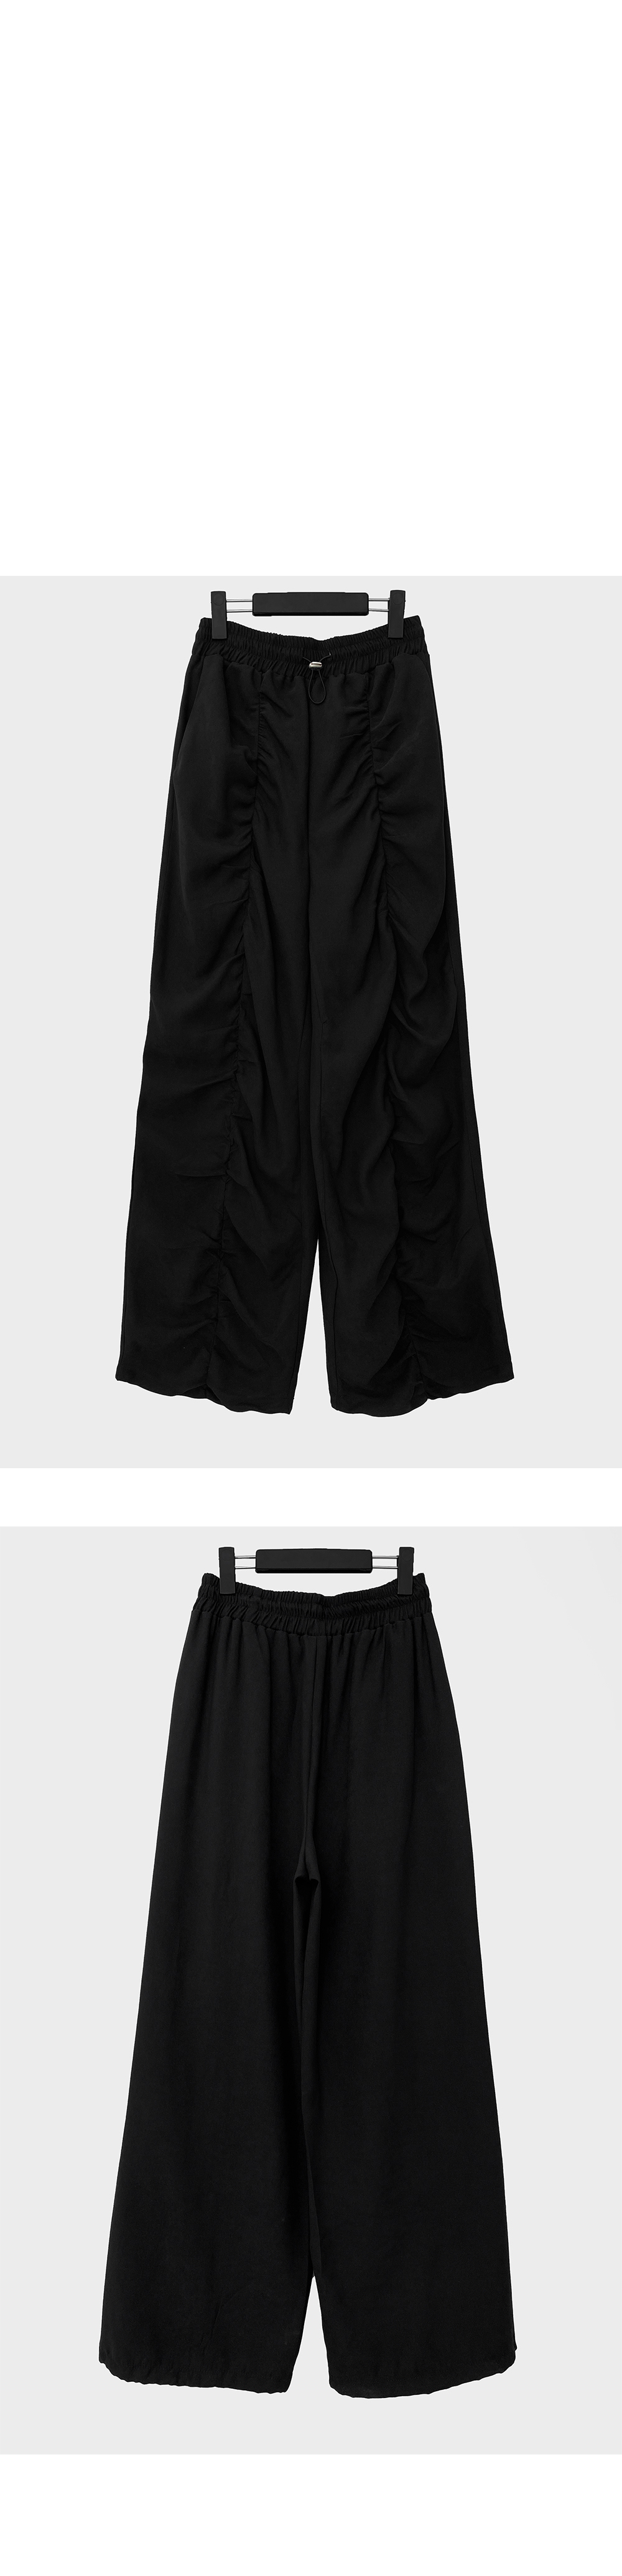 suspenders skirt/pants charcoal color image-S1L8